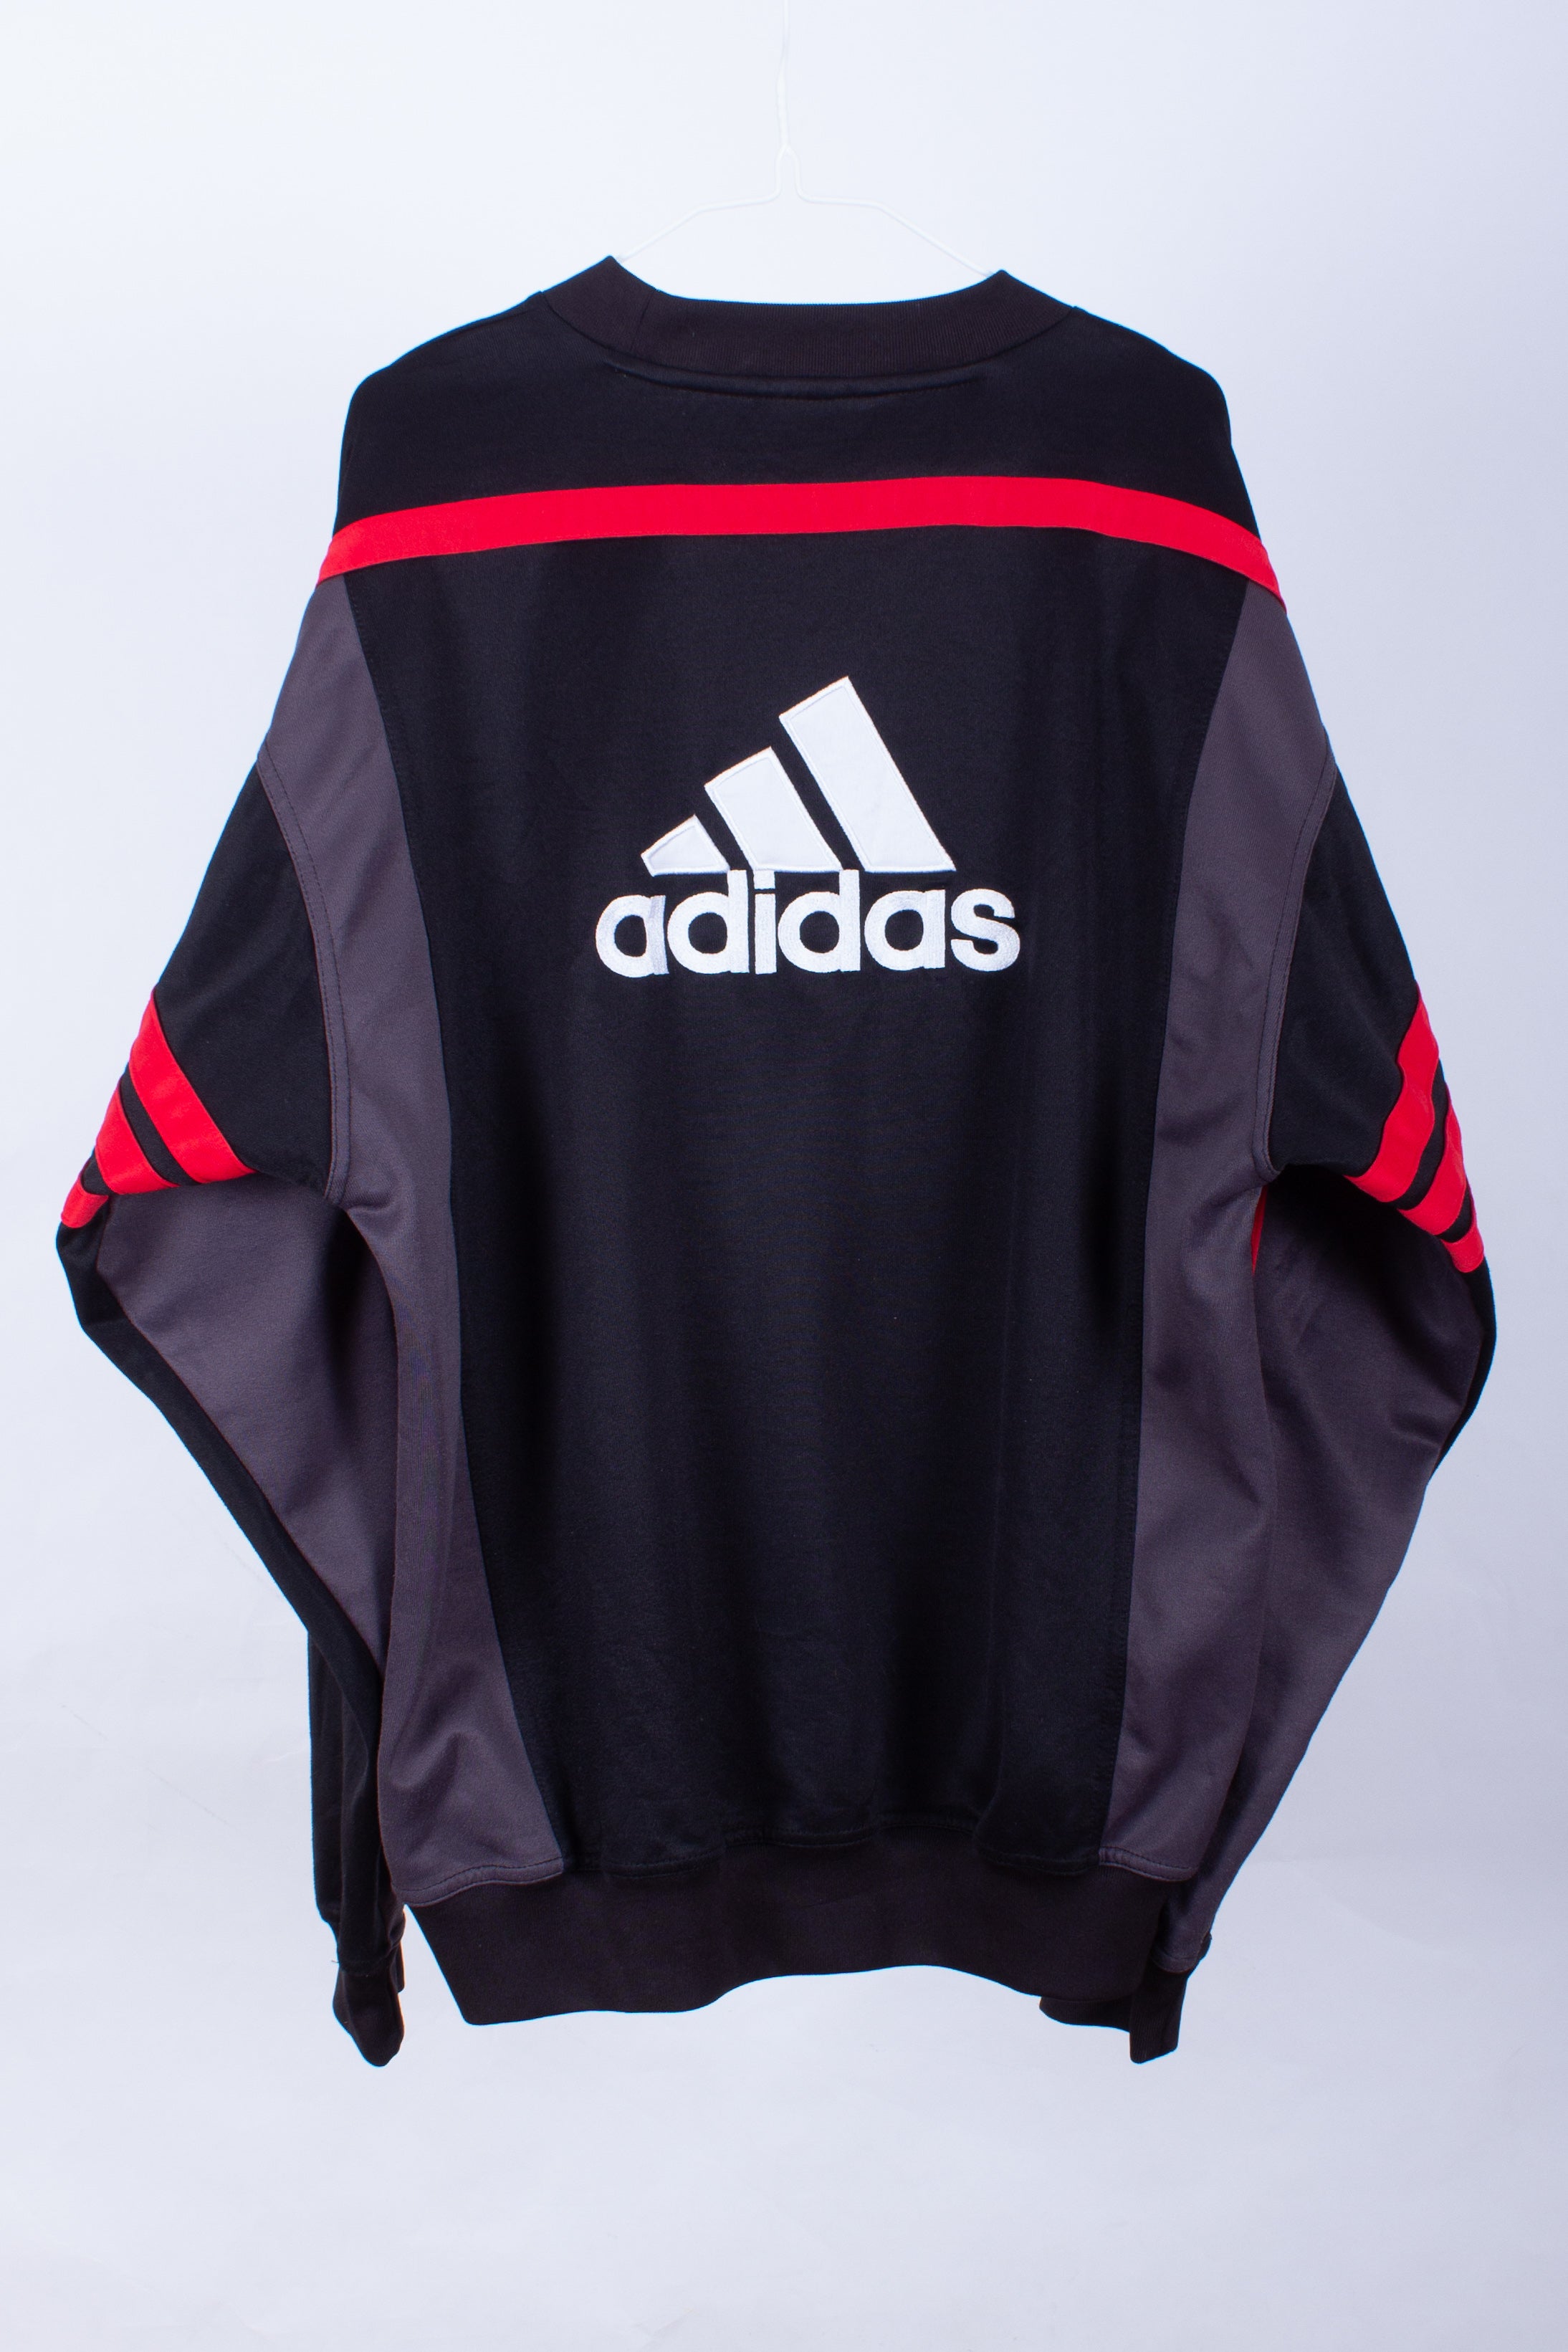 AC Milan 1990's Adidas Training Sweatshirt (M/L)